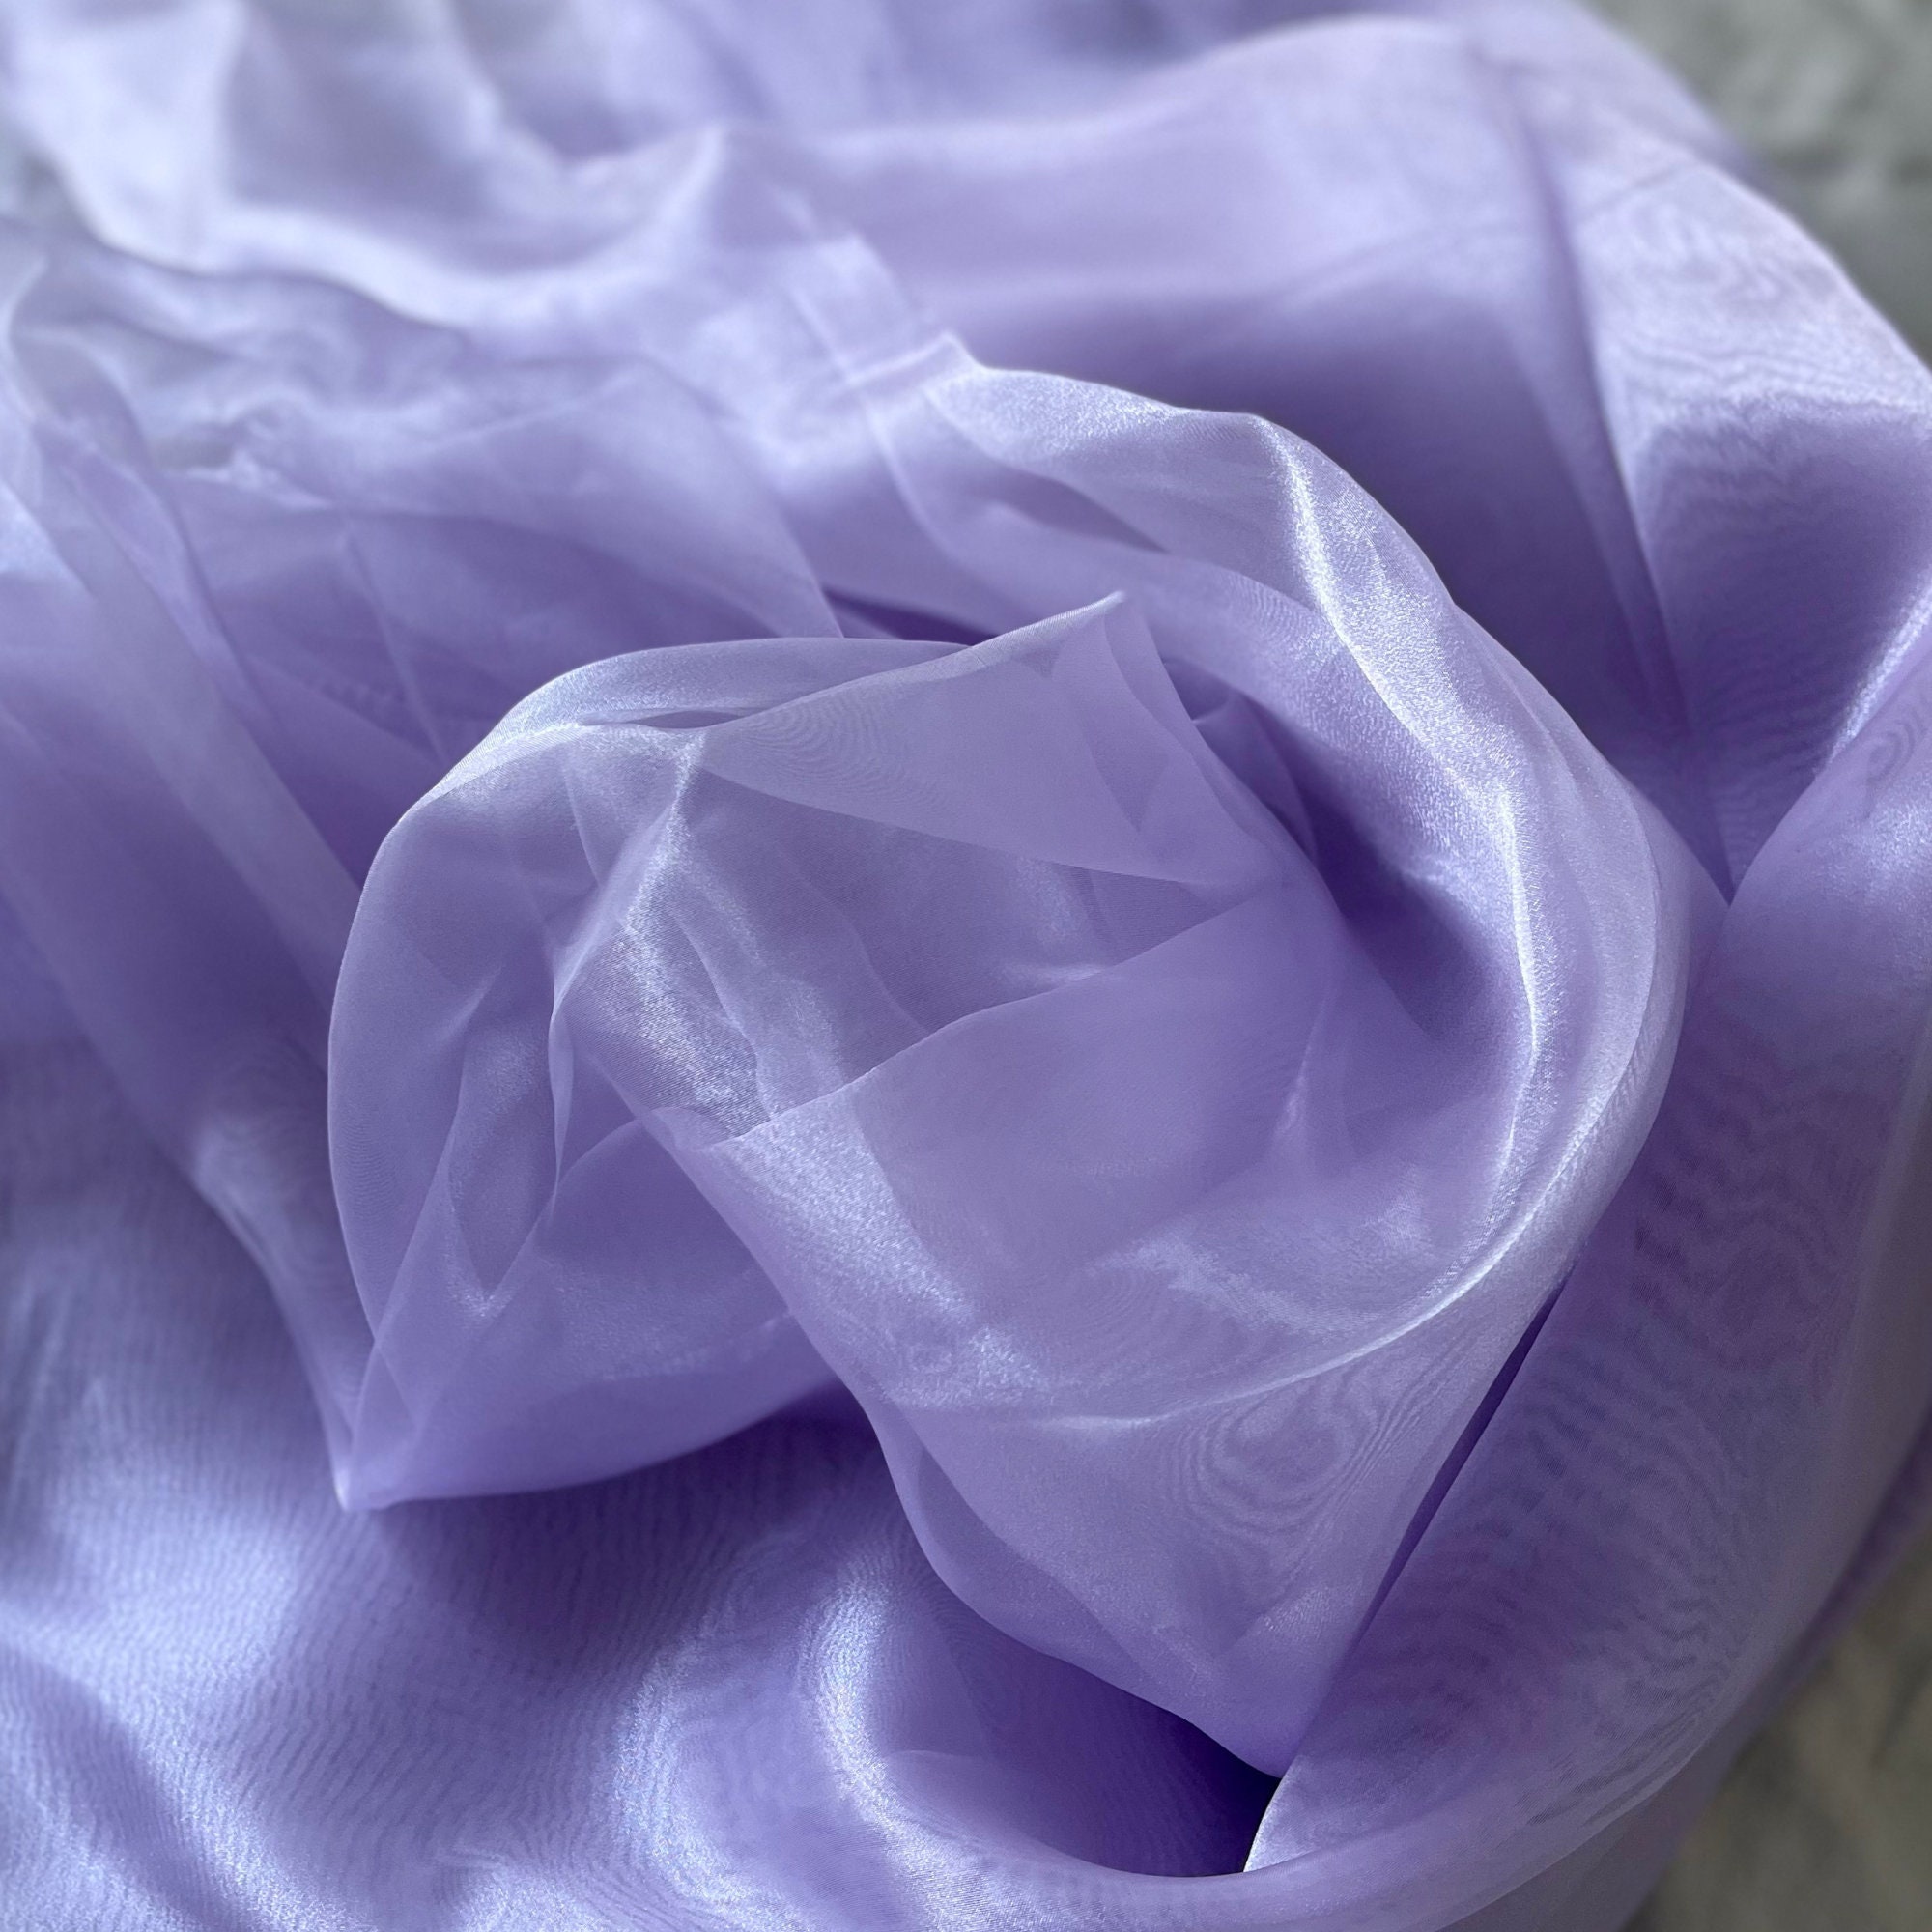 Satin Faced Organza - Royal Purple - Fabric by the Yard